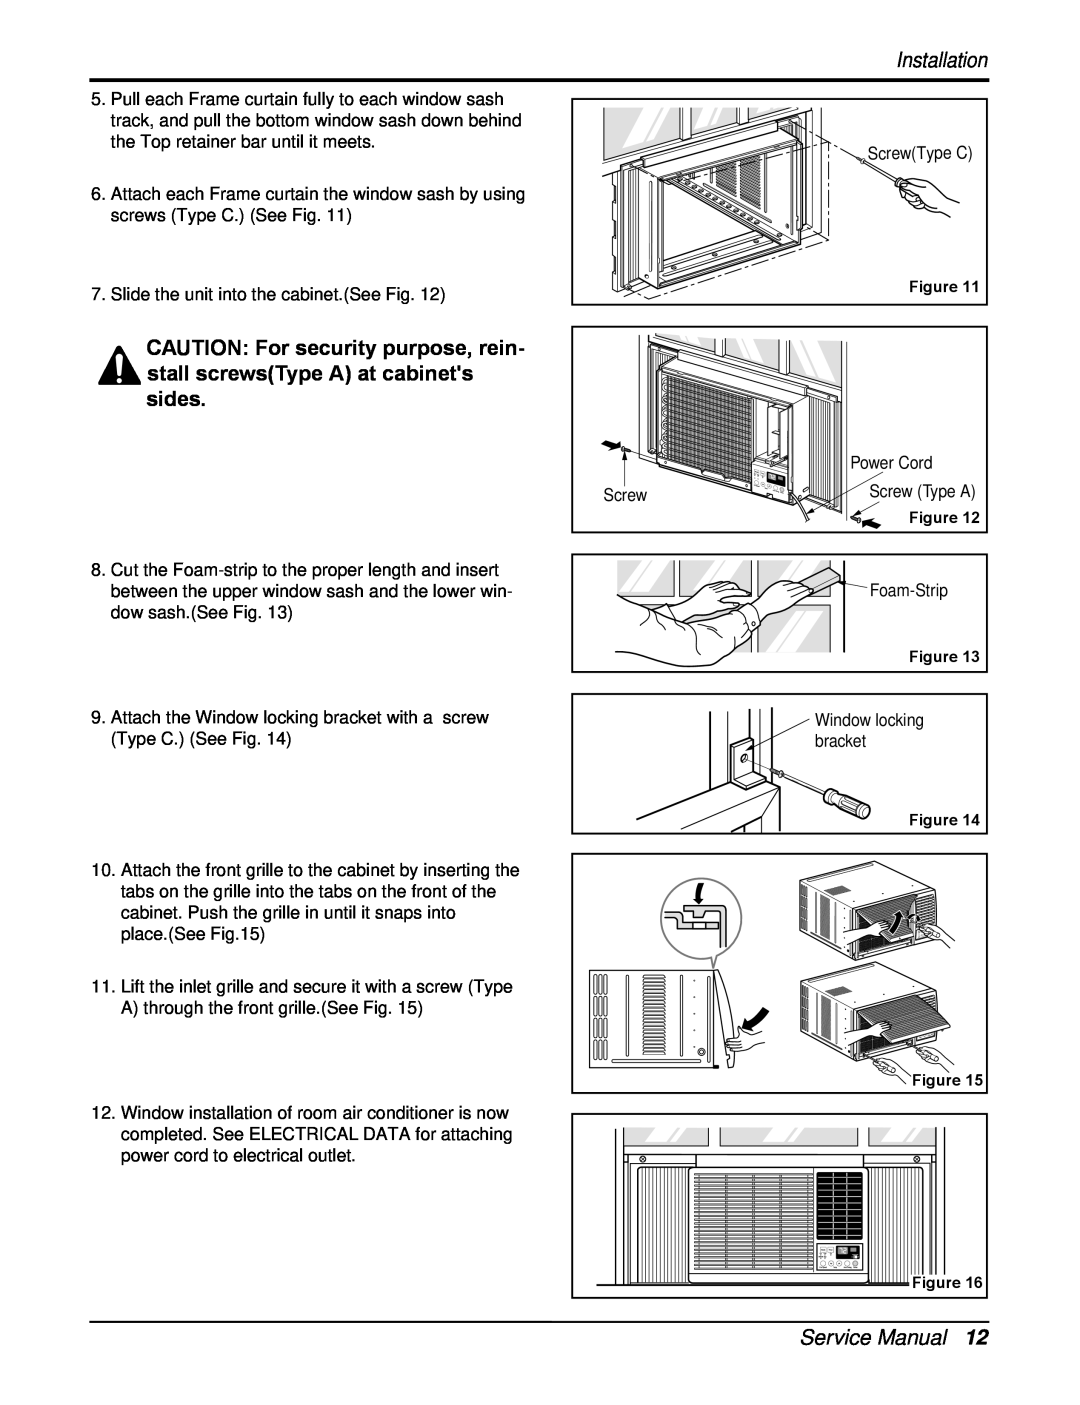 Heat Controller RAD-243A, RAD-183A service manual Installation, Foam-Strip 